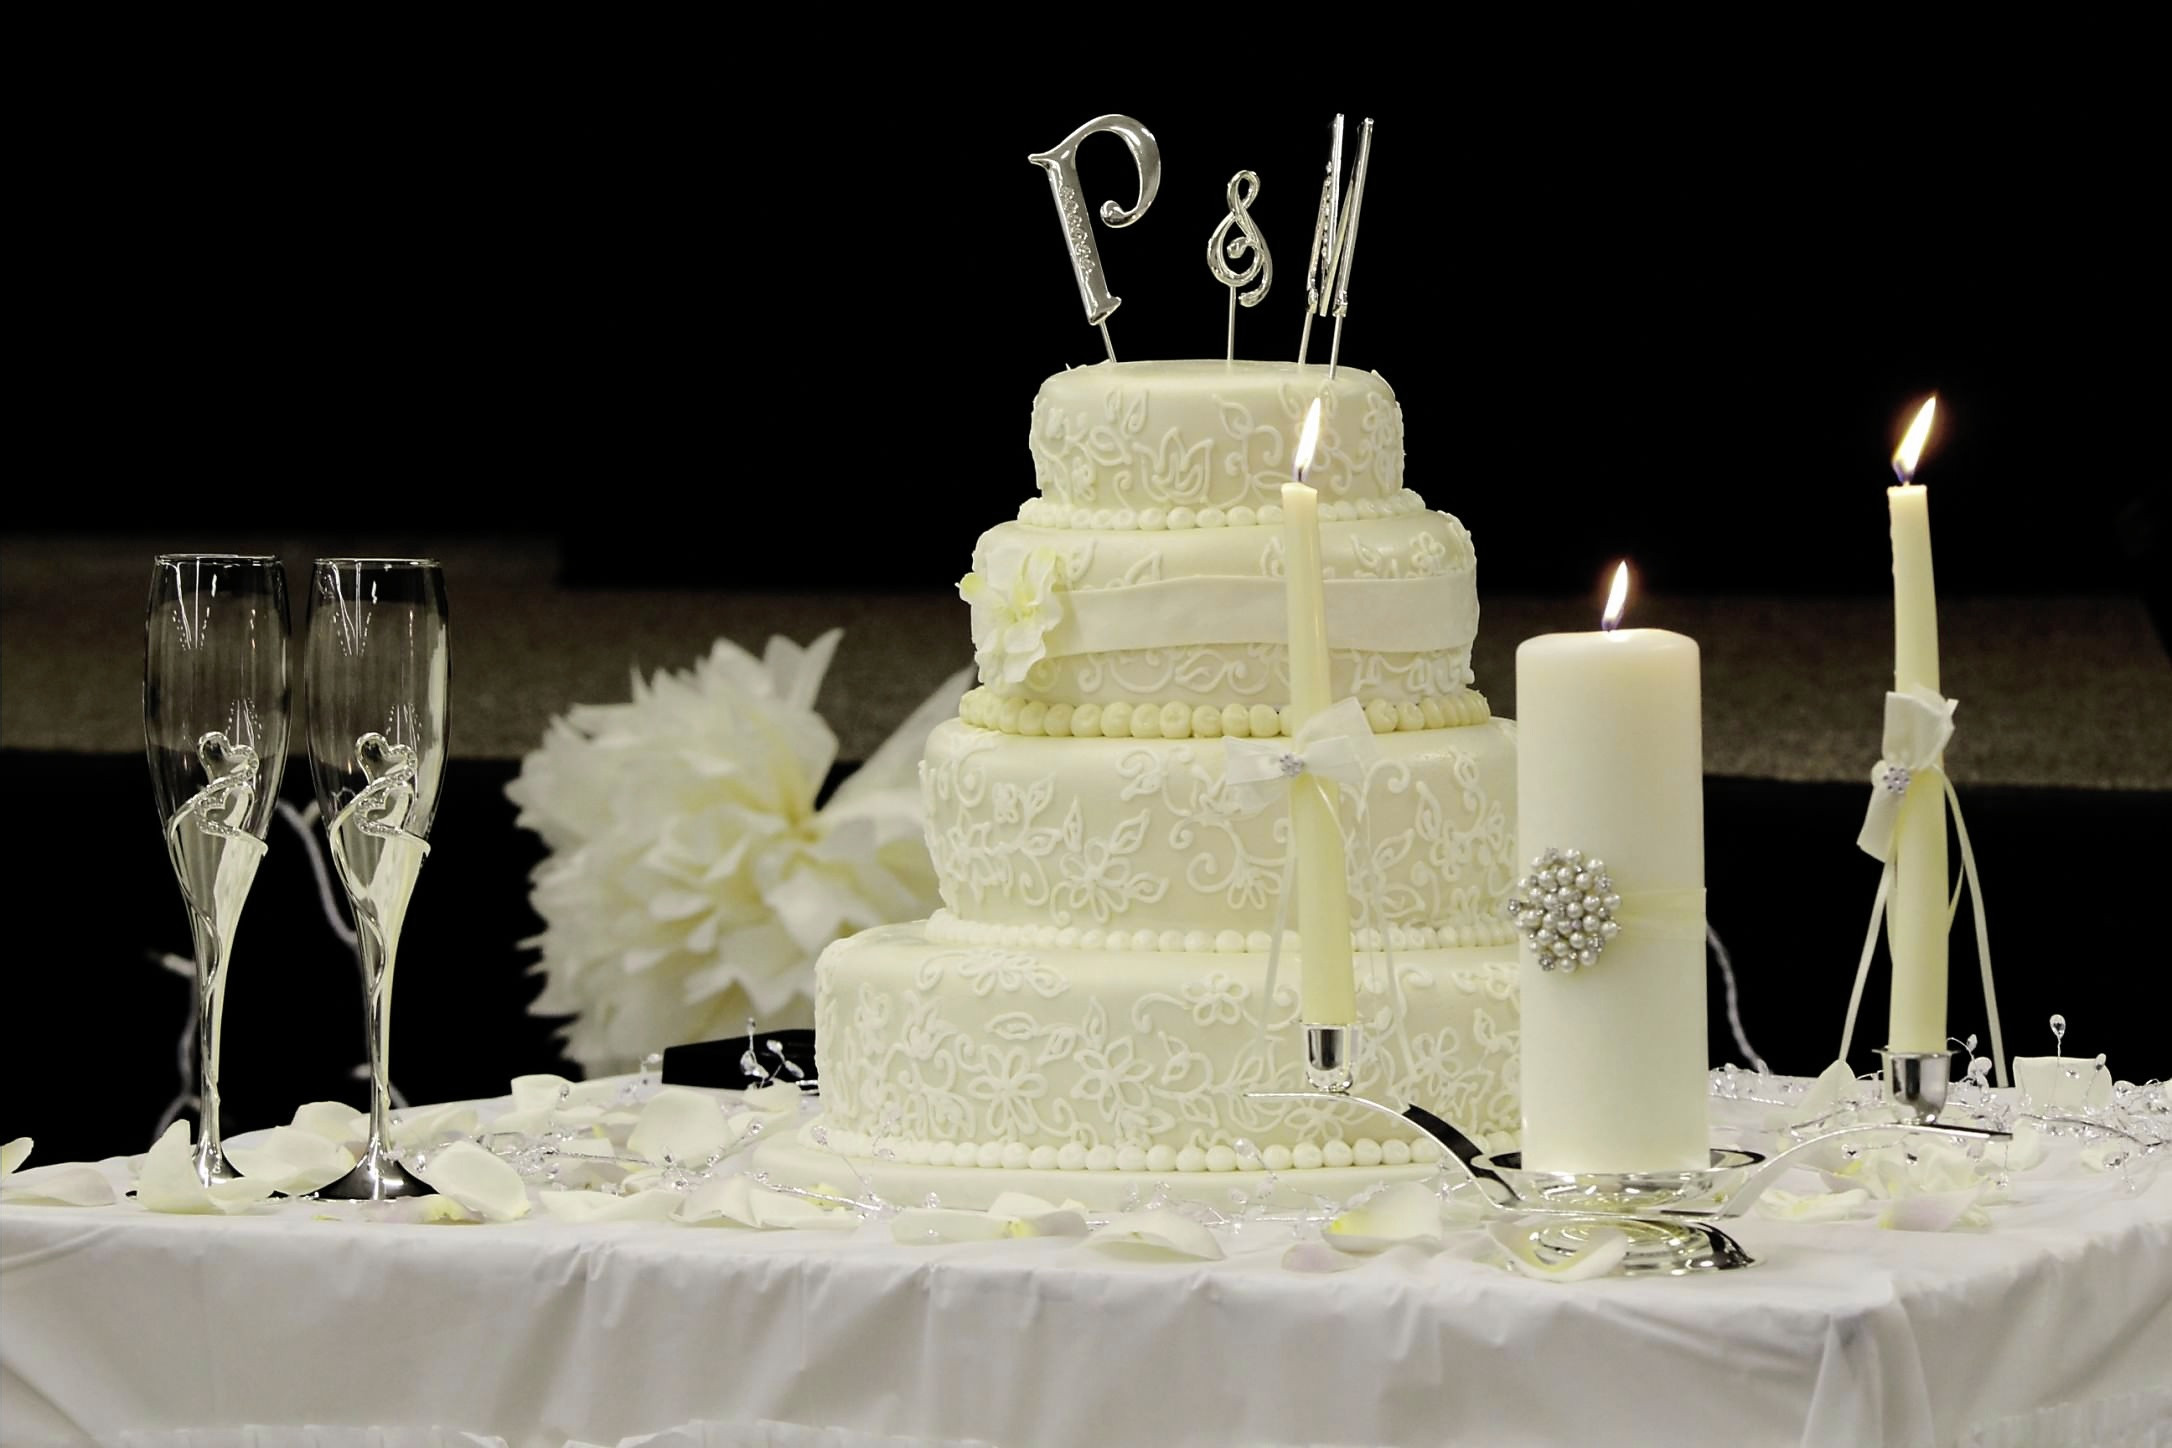 Sams Club Wedding Cakes
 Why You Should Purchase Weeding Cakes at Sams Club idea